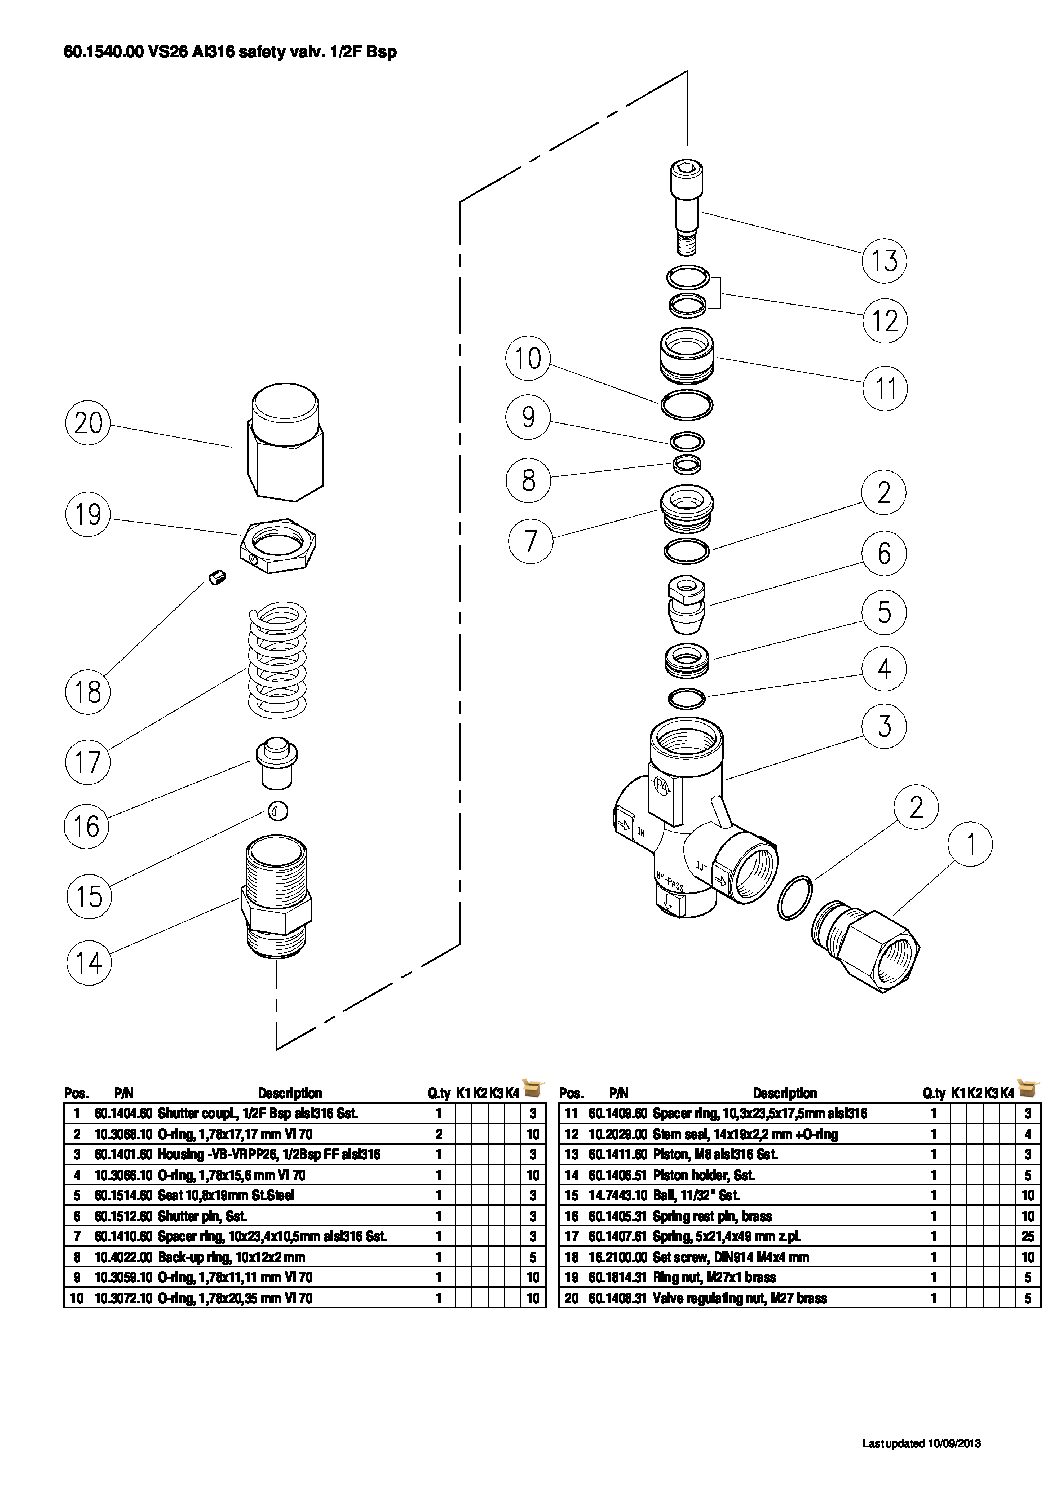 PA VS26 safety valve parts breakdown